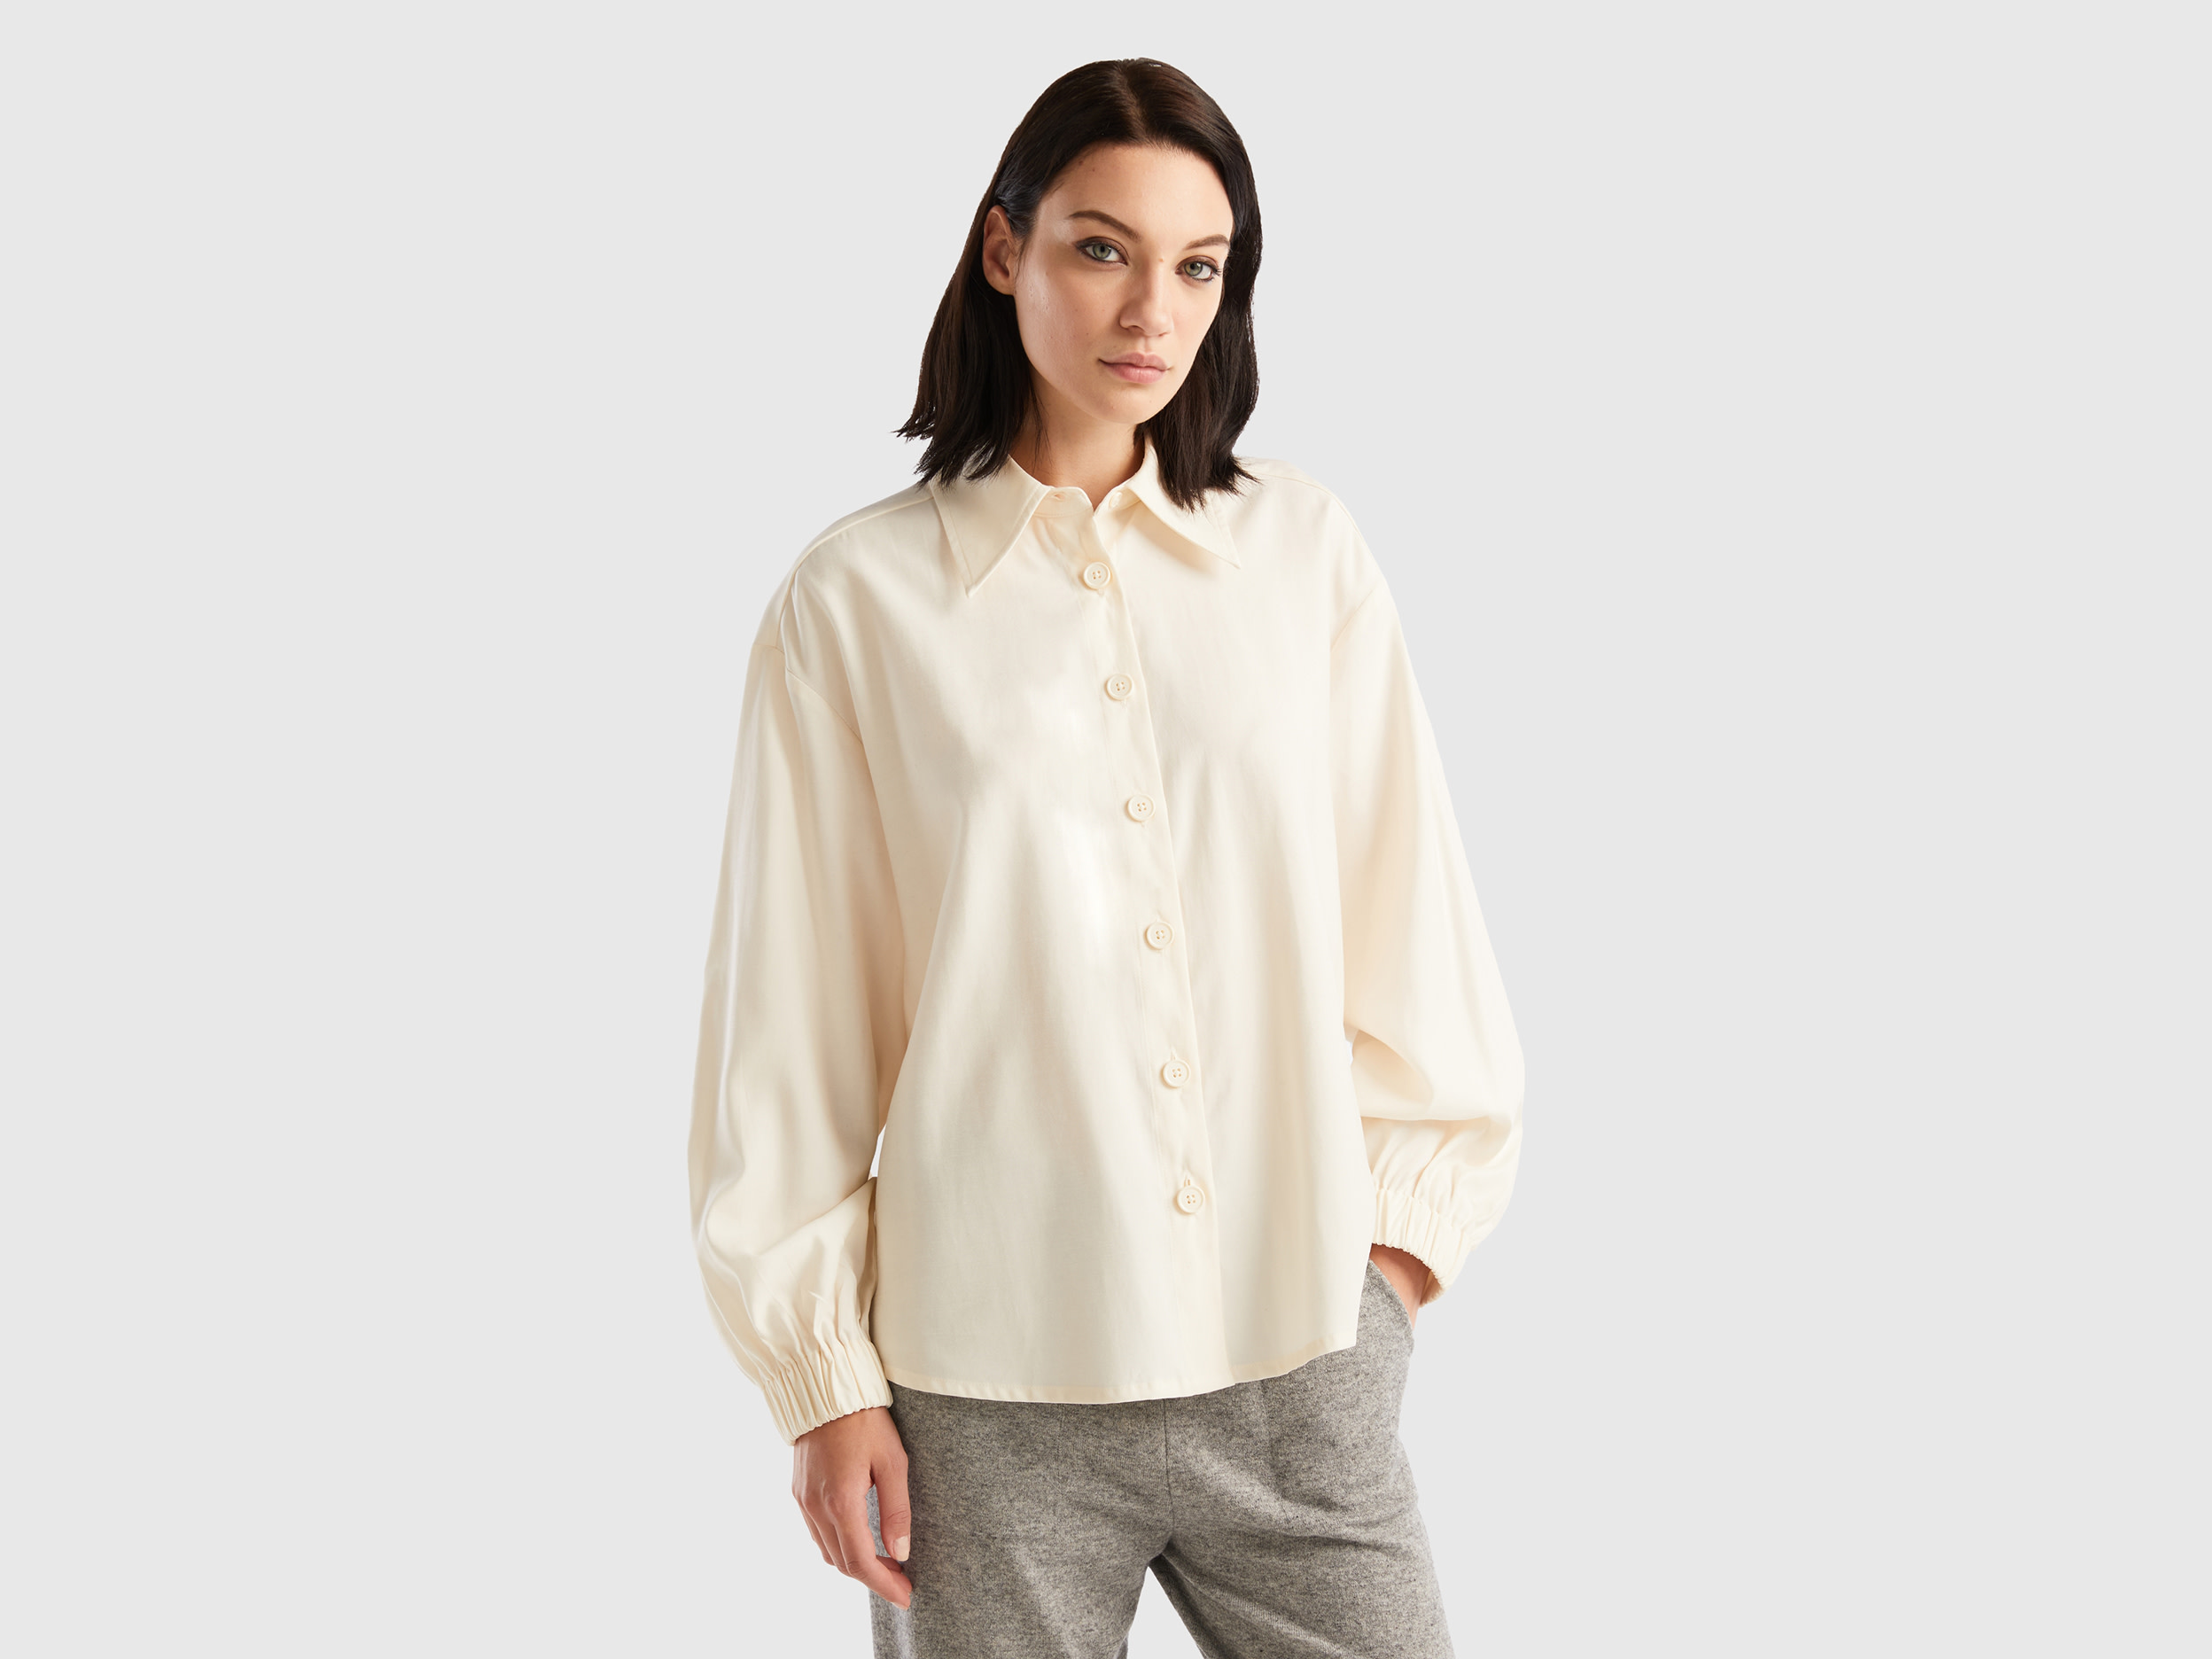 Benetton, Viscose And Linen Shirt, size L, Creamy White, Women